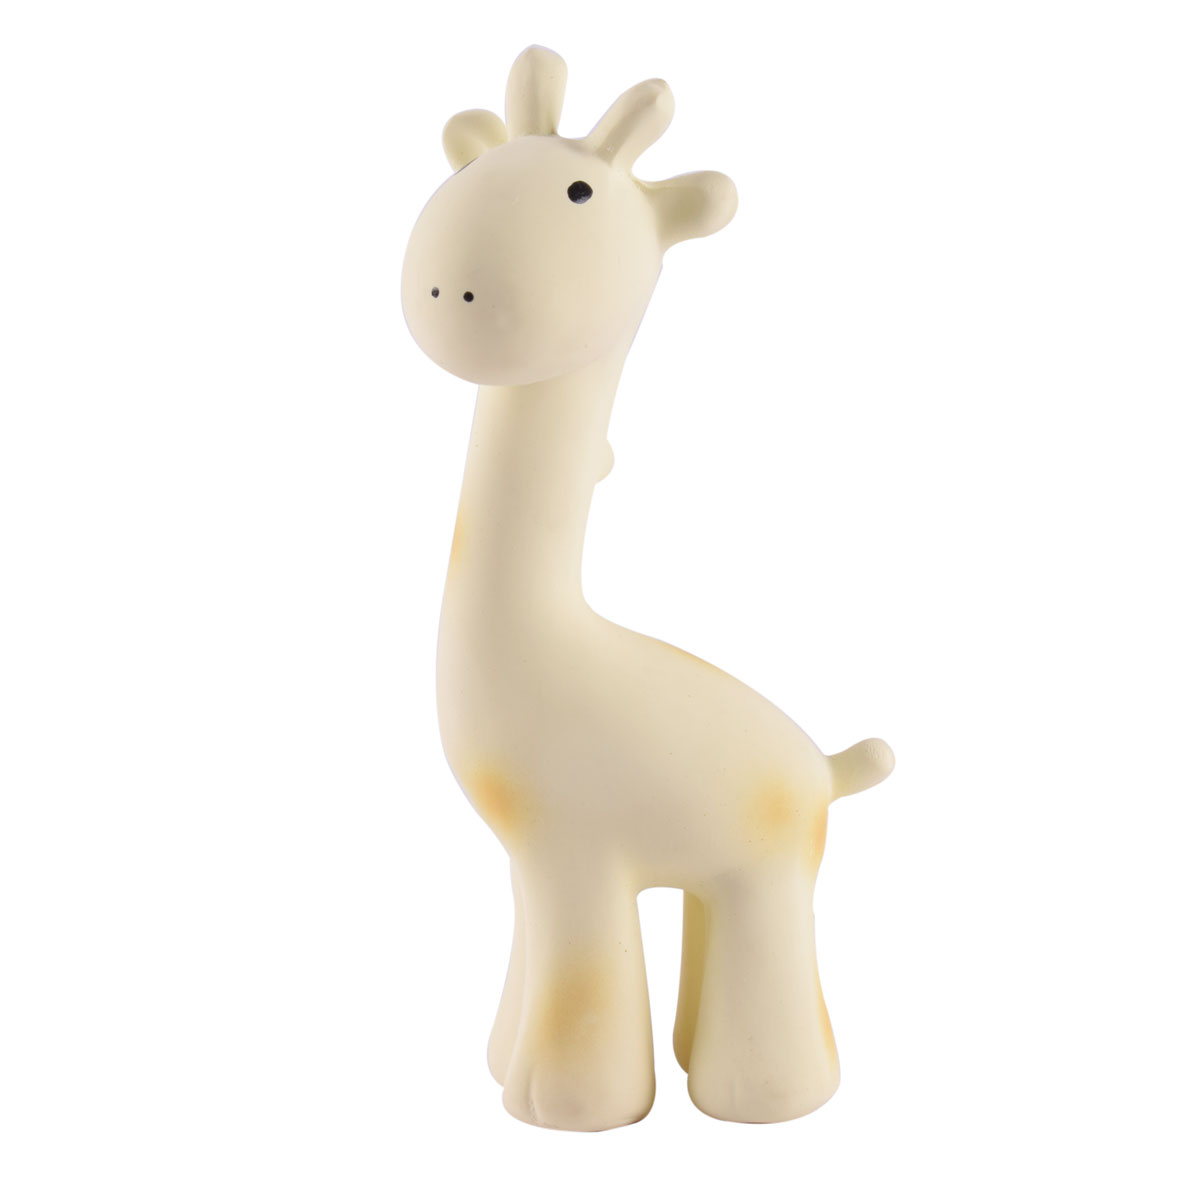 96002 Giraffe - צעצוע ג'ירפה מגומי